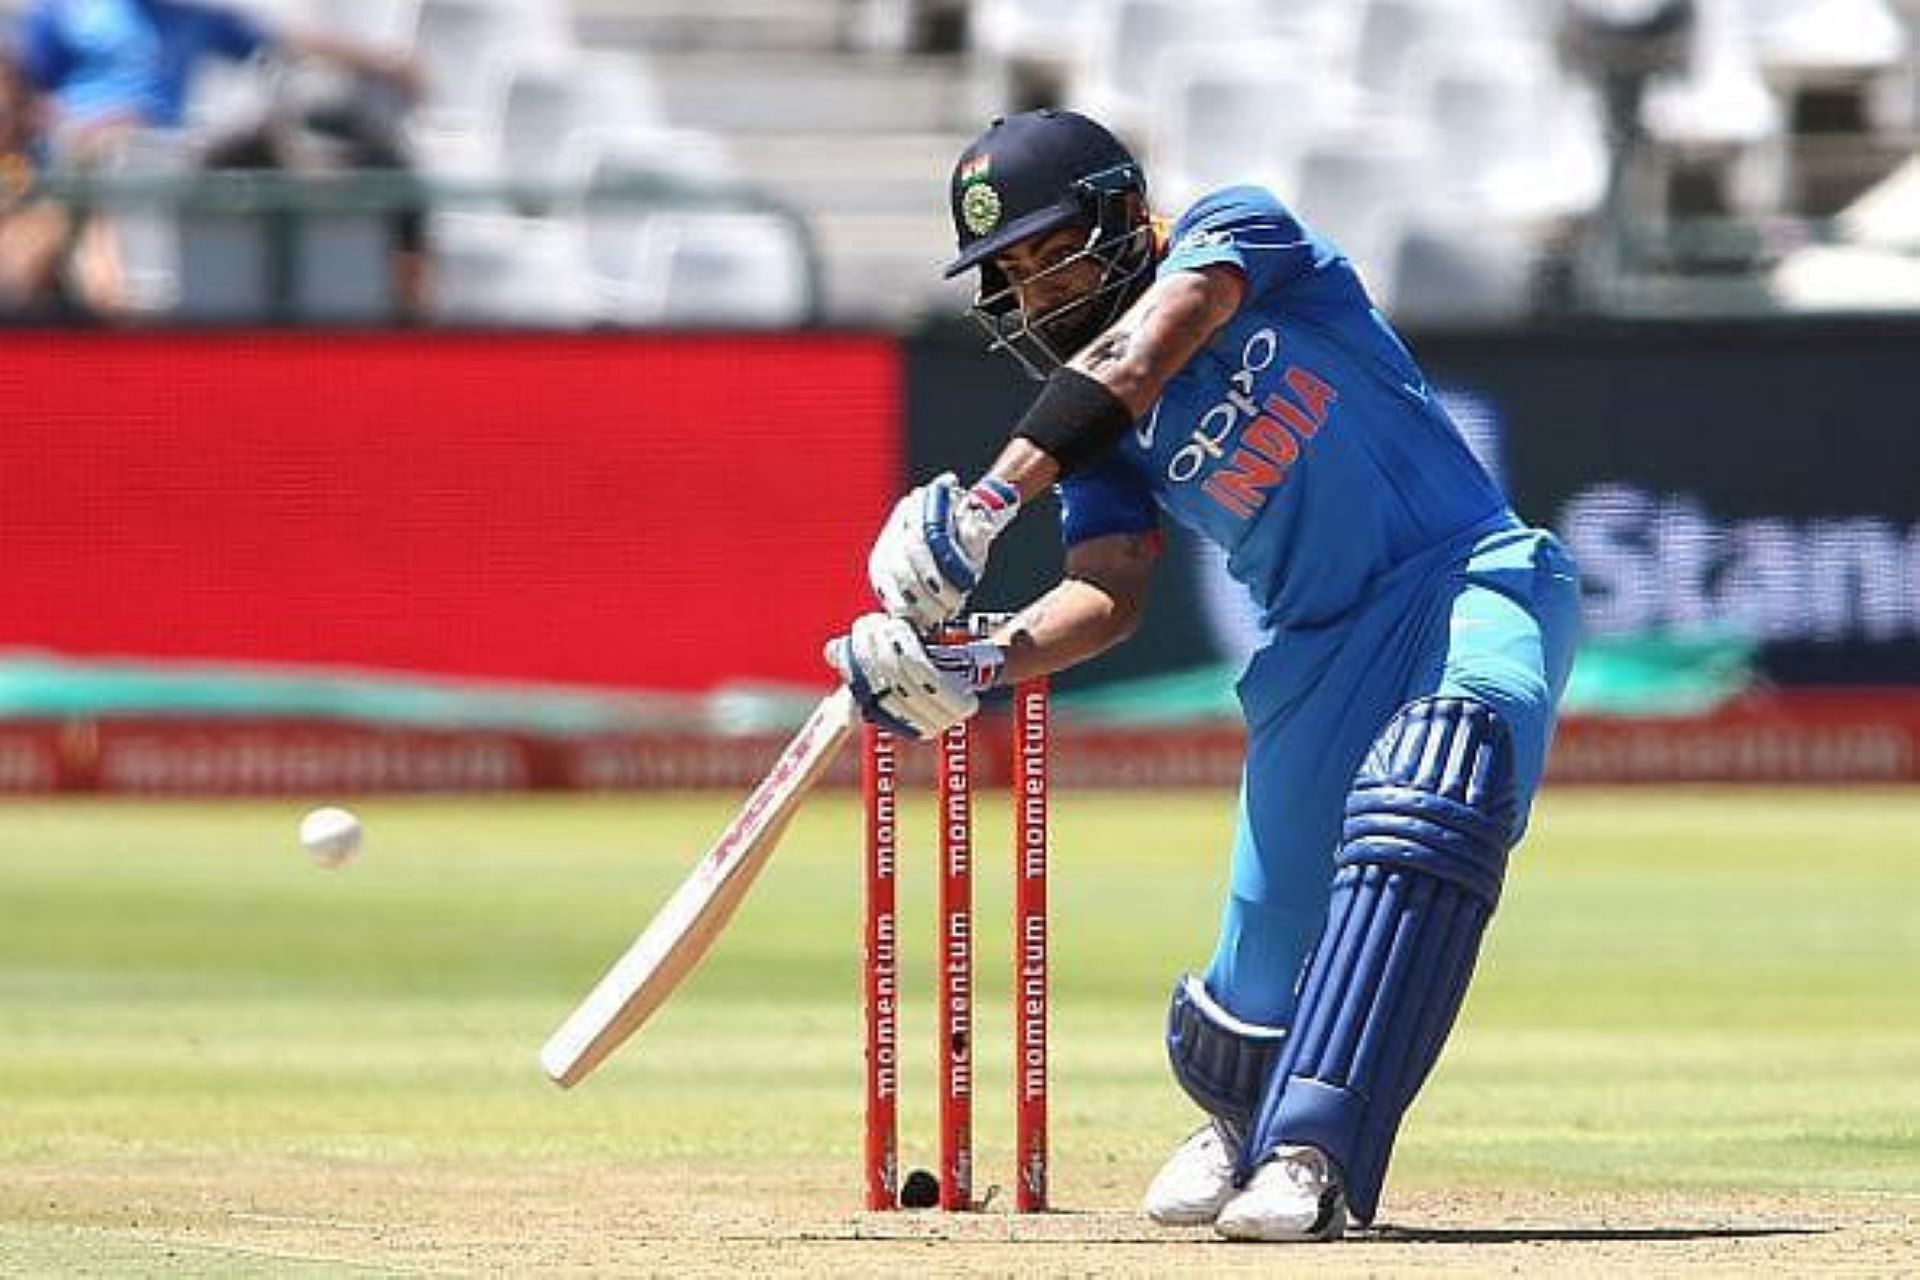 Virat Kohli struck 3 hundreds in the 6-match away ODI series against South Africa in 2018.